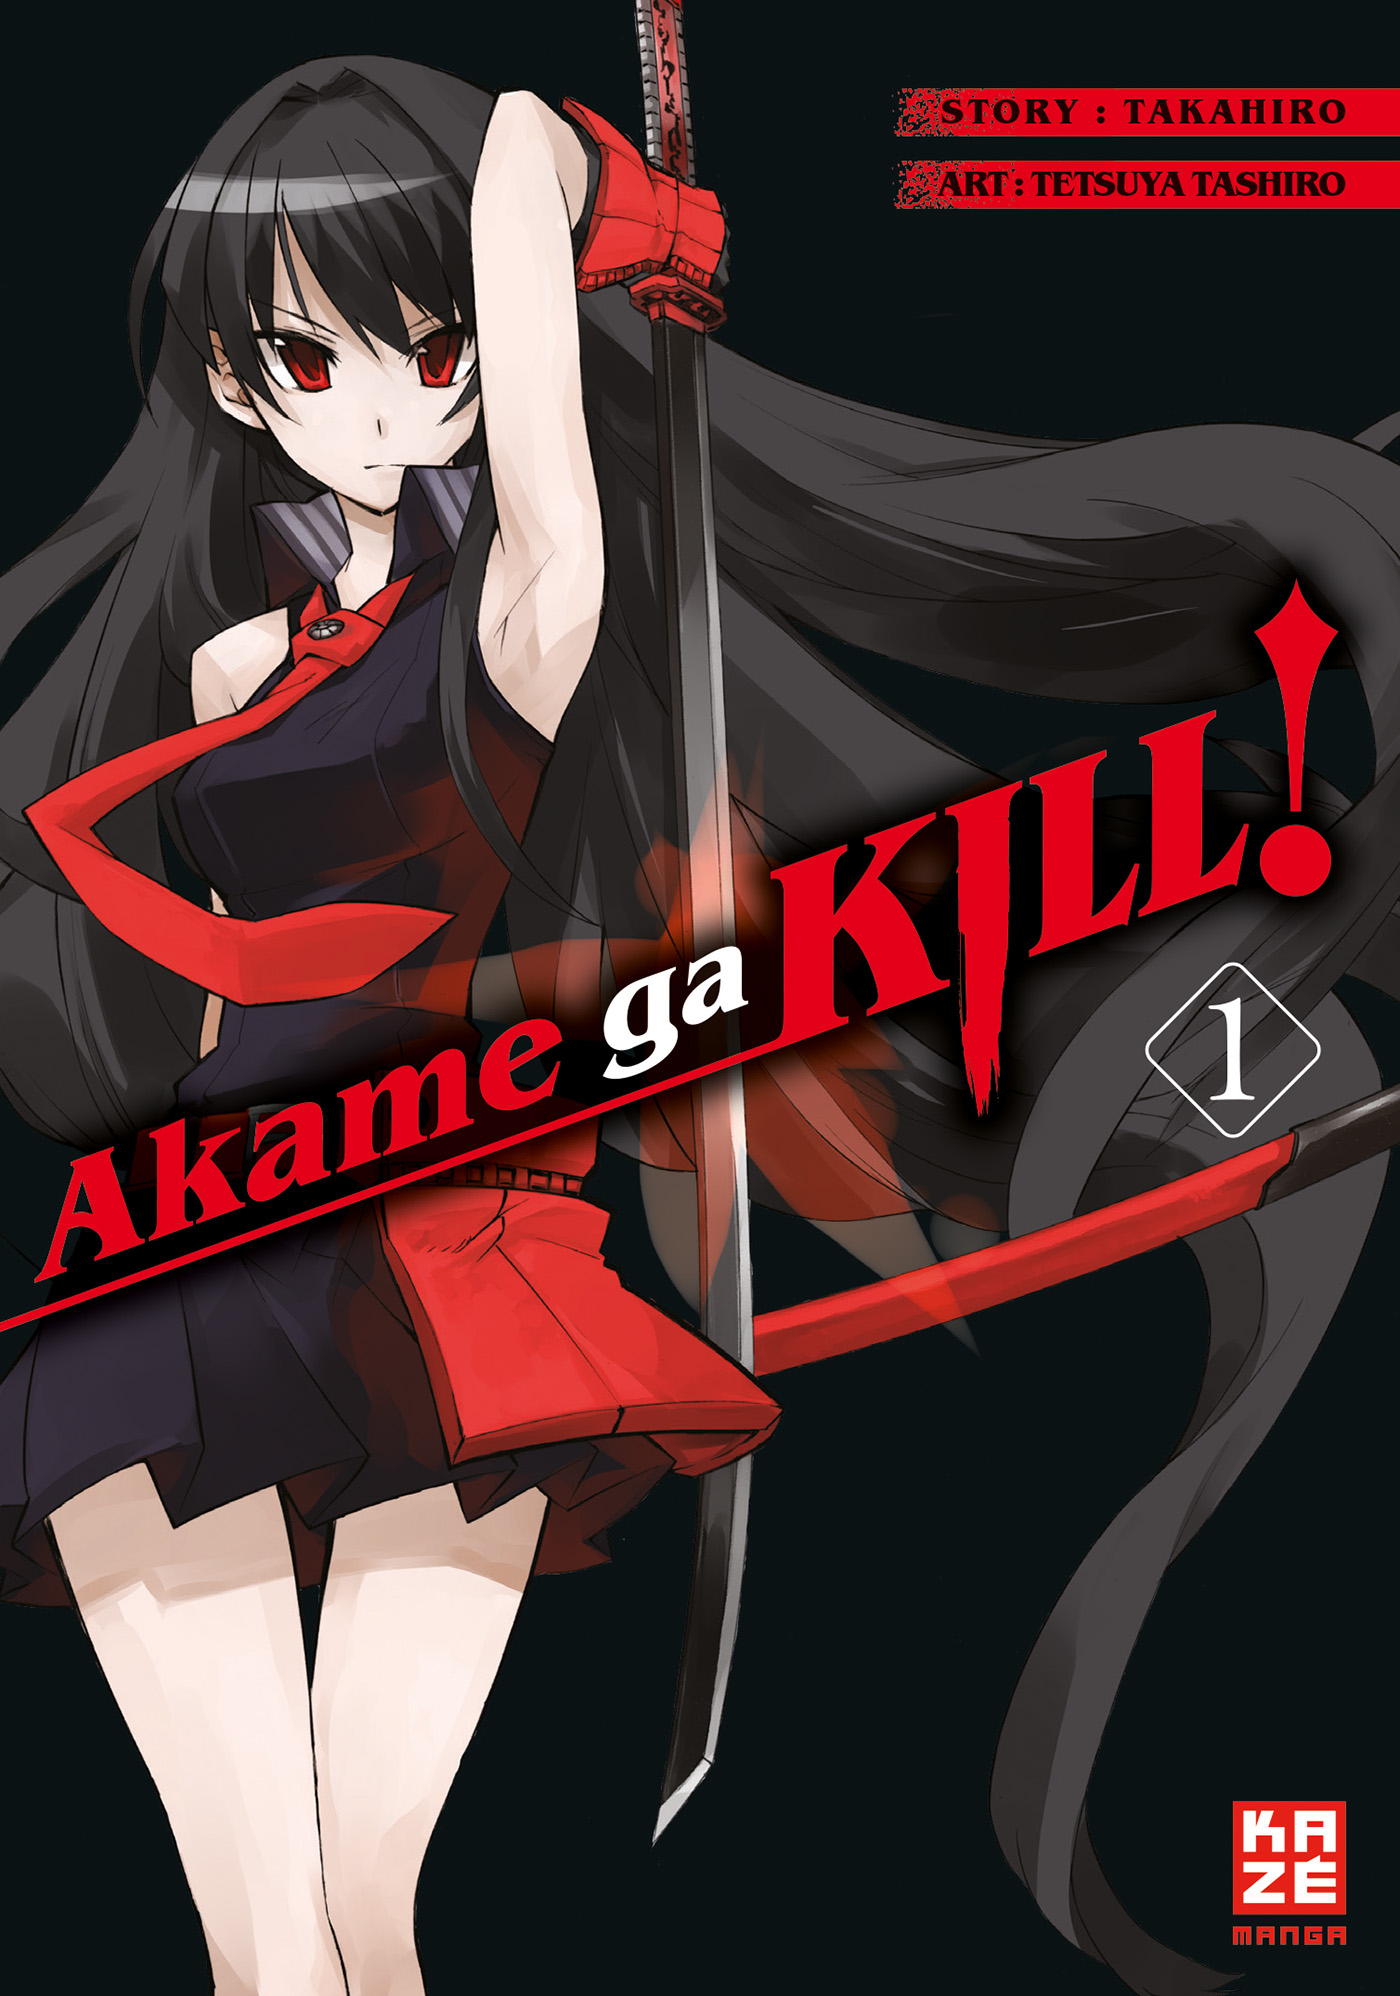 01 - Akame Kill! Ga